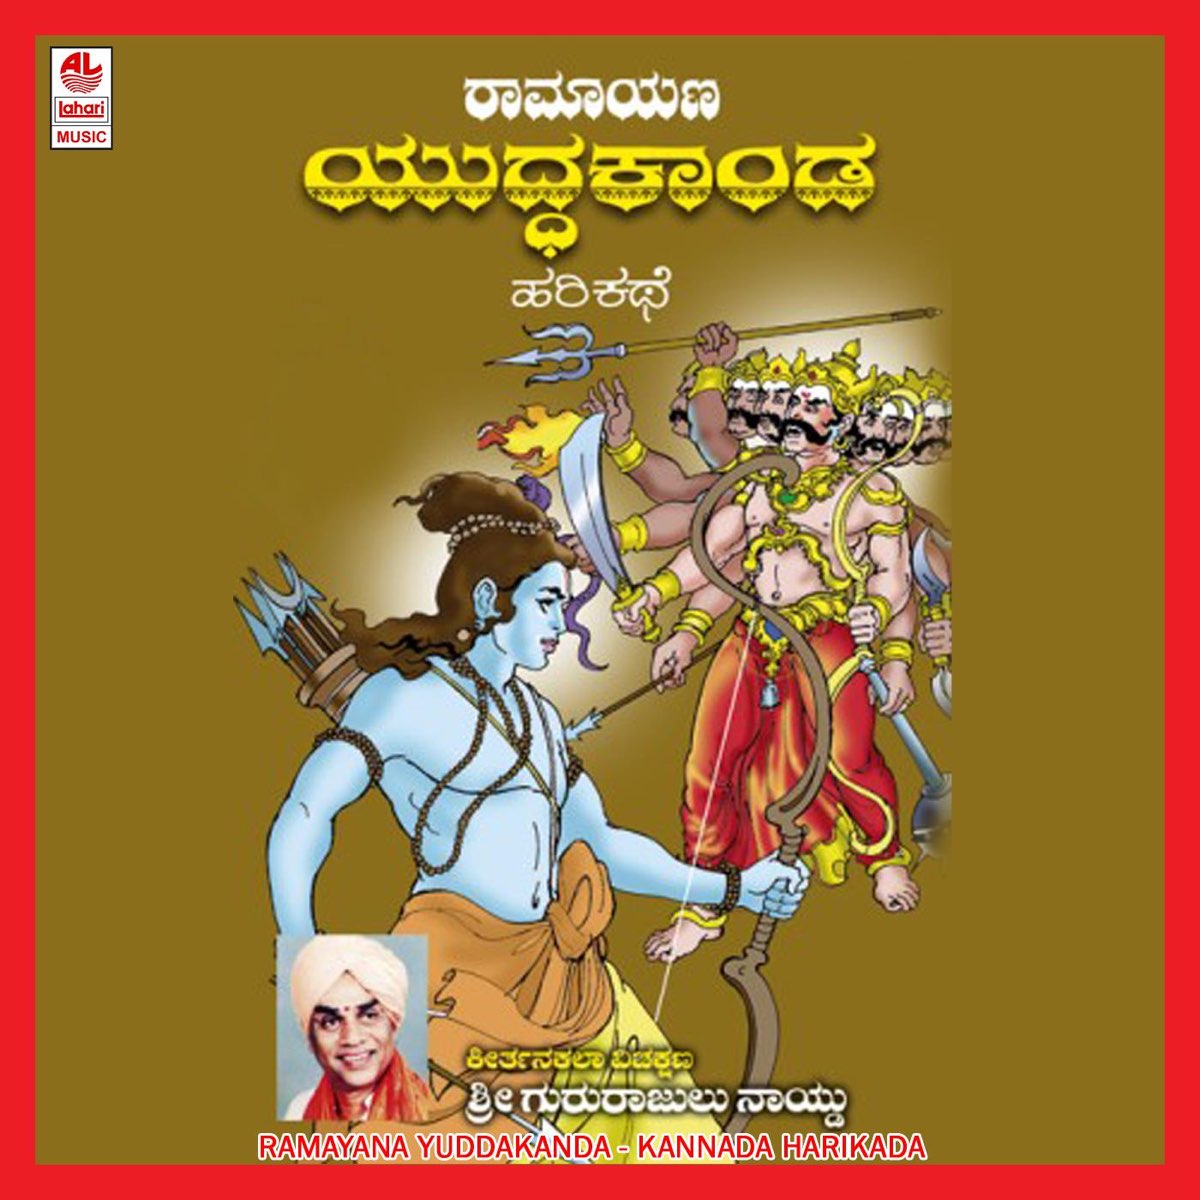 Ramayana Auddakanda by Gururajulu Naidu on Apple Music